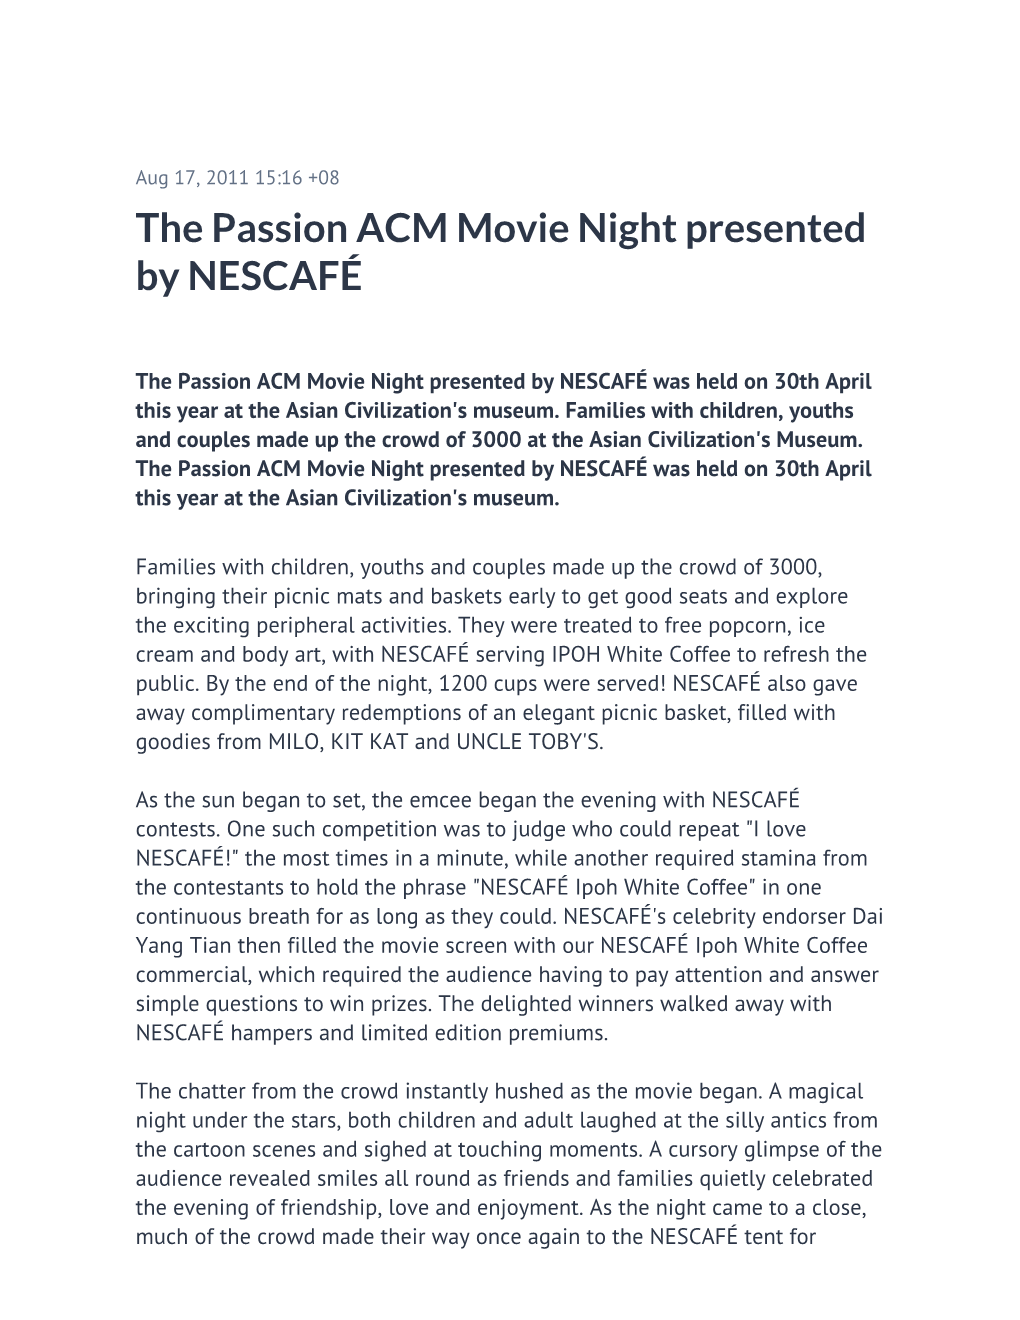 The Passion ACM Movie Night Presented by NESCAFÉ